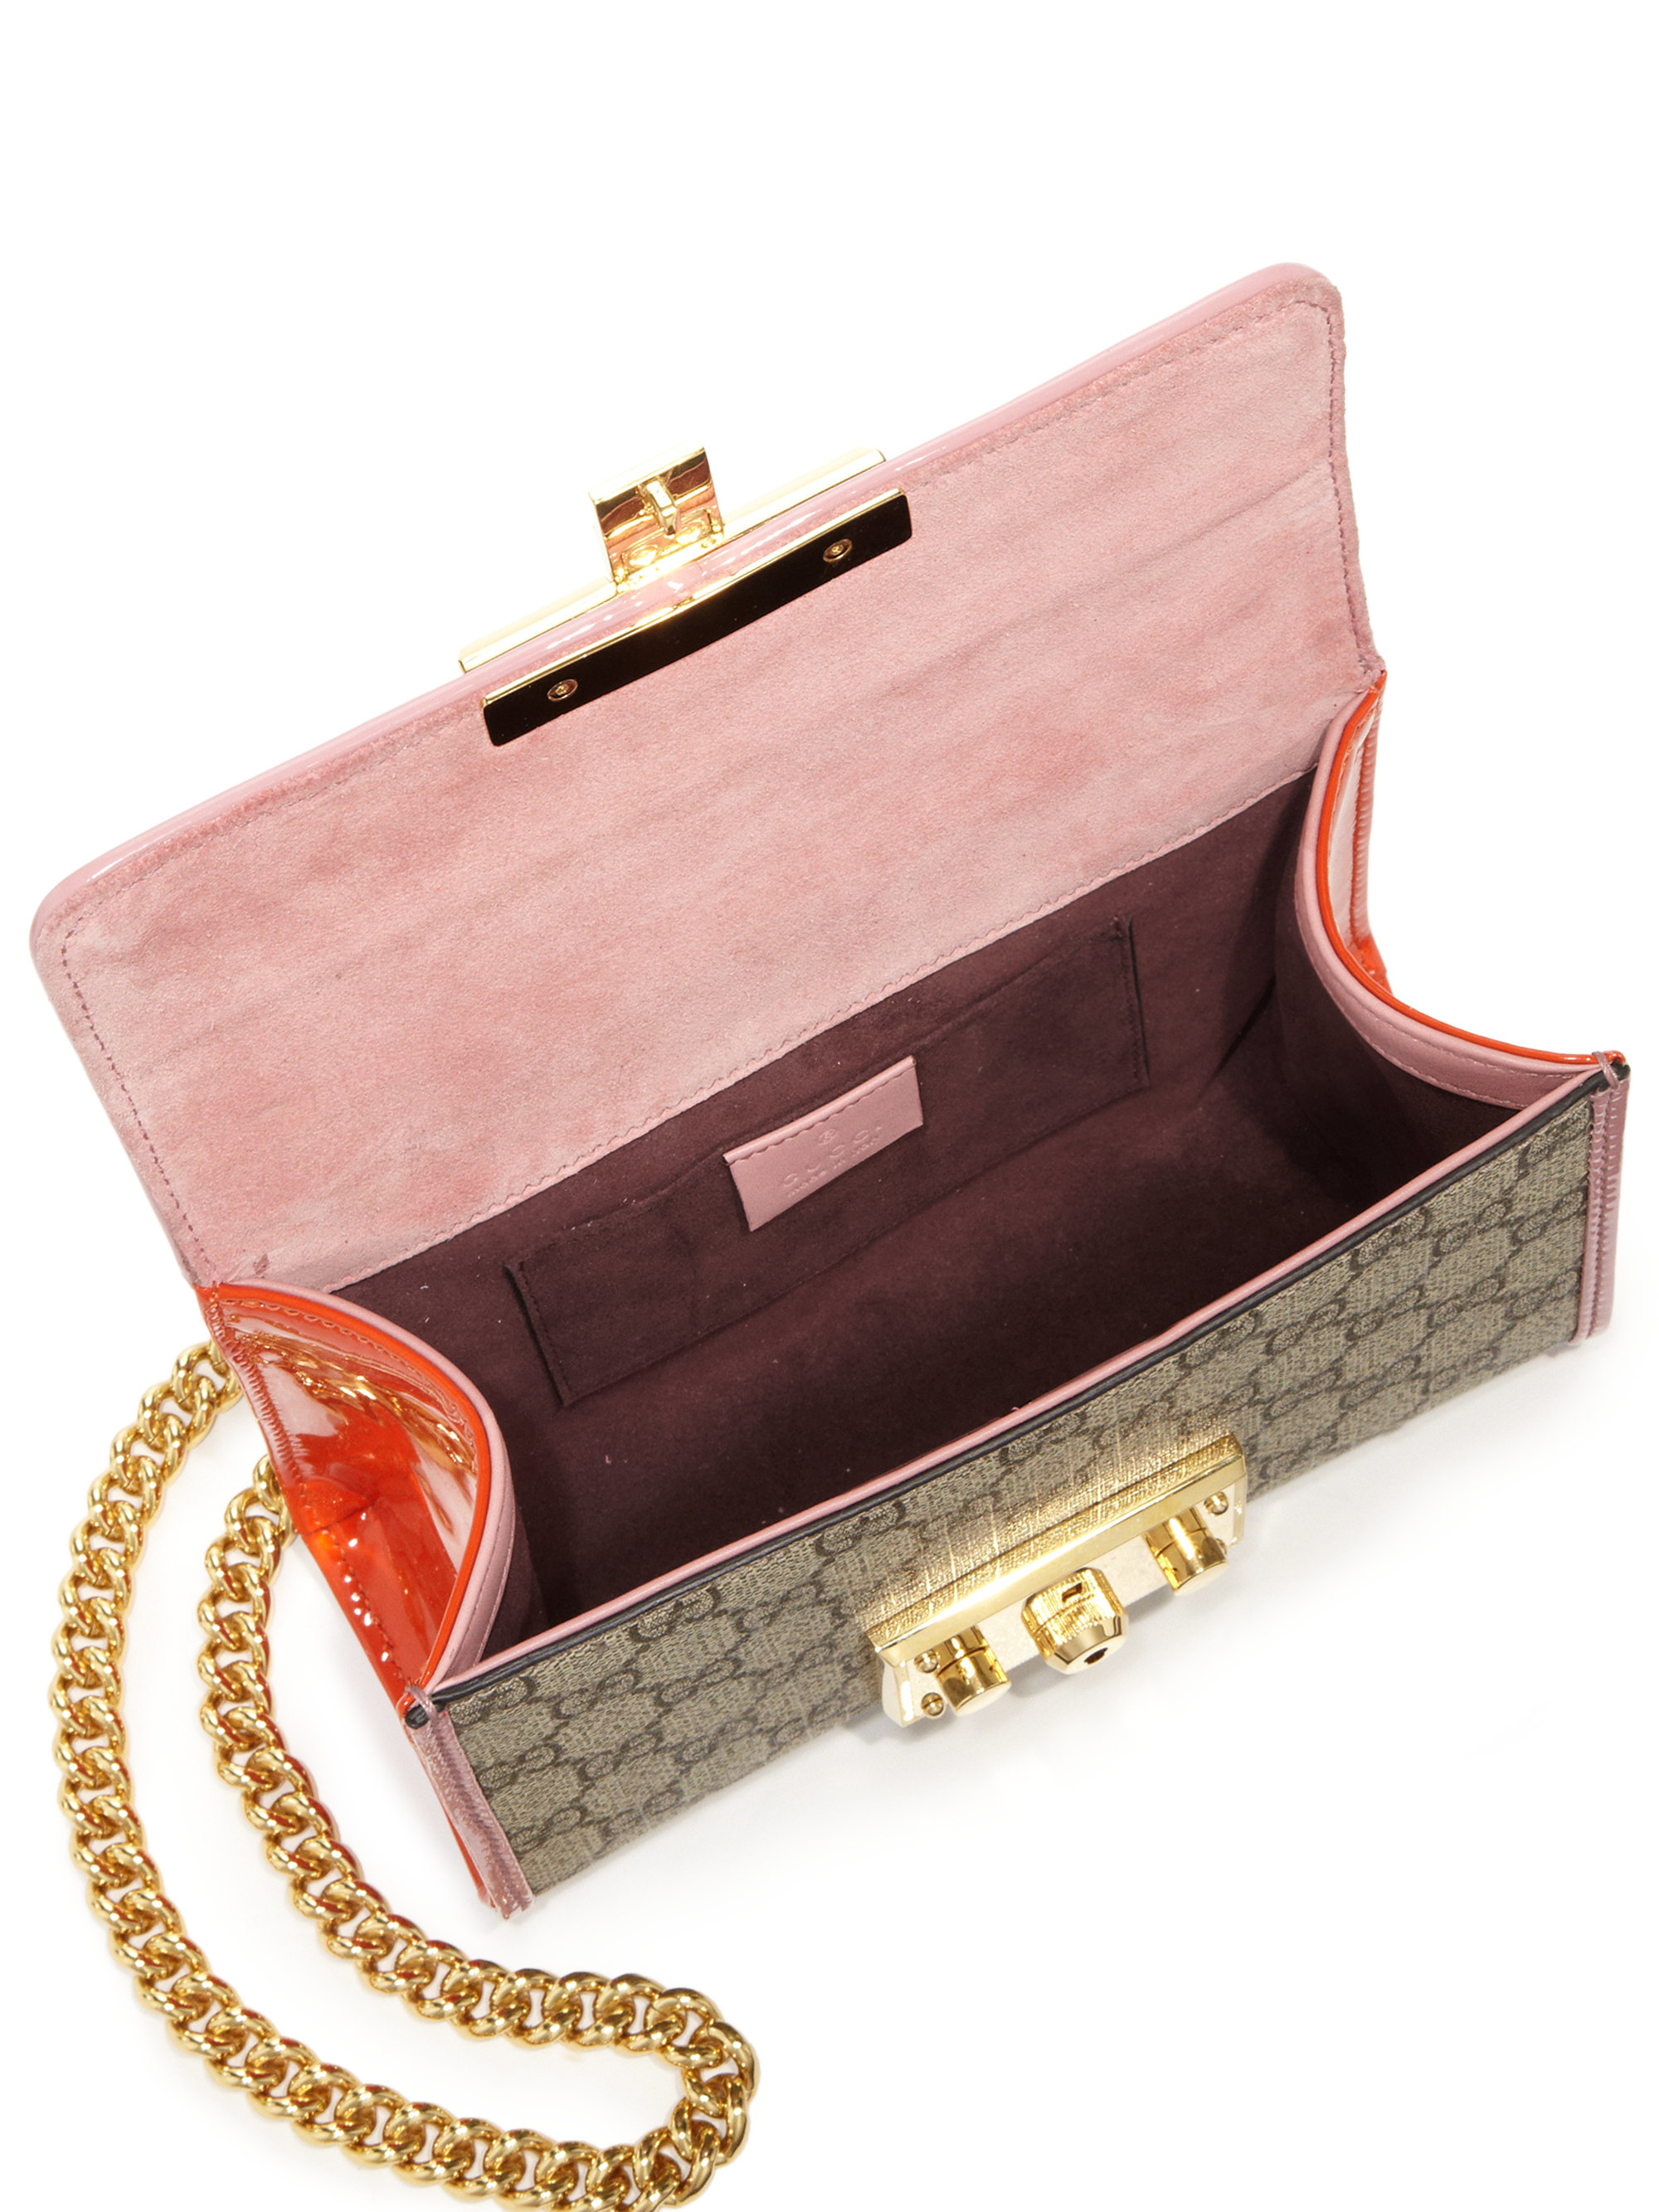 Gucci Leather Padlock Gg Supreme Small Shoulder Bag in Beige-Rose (Pink) - Lyst